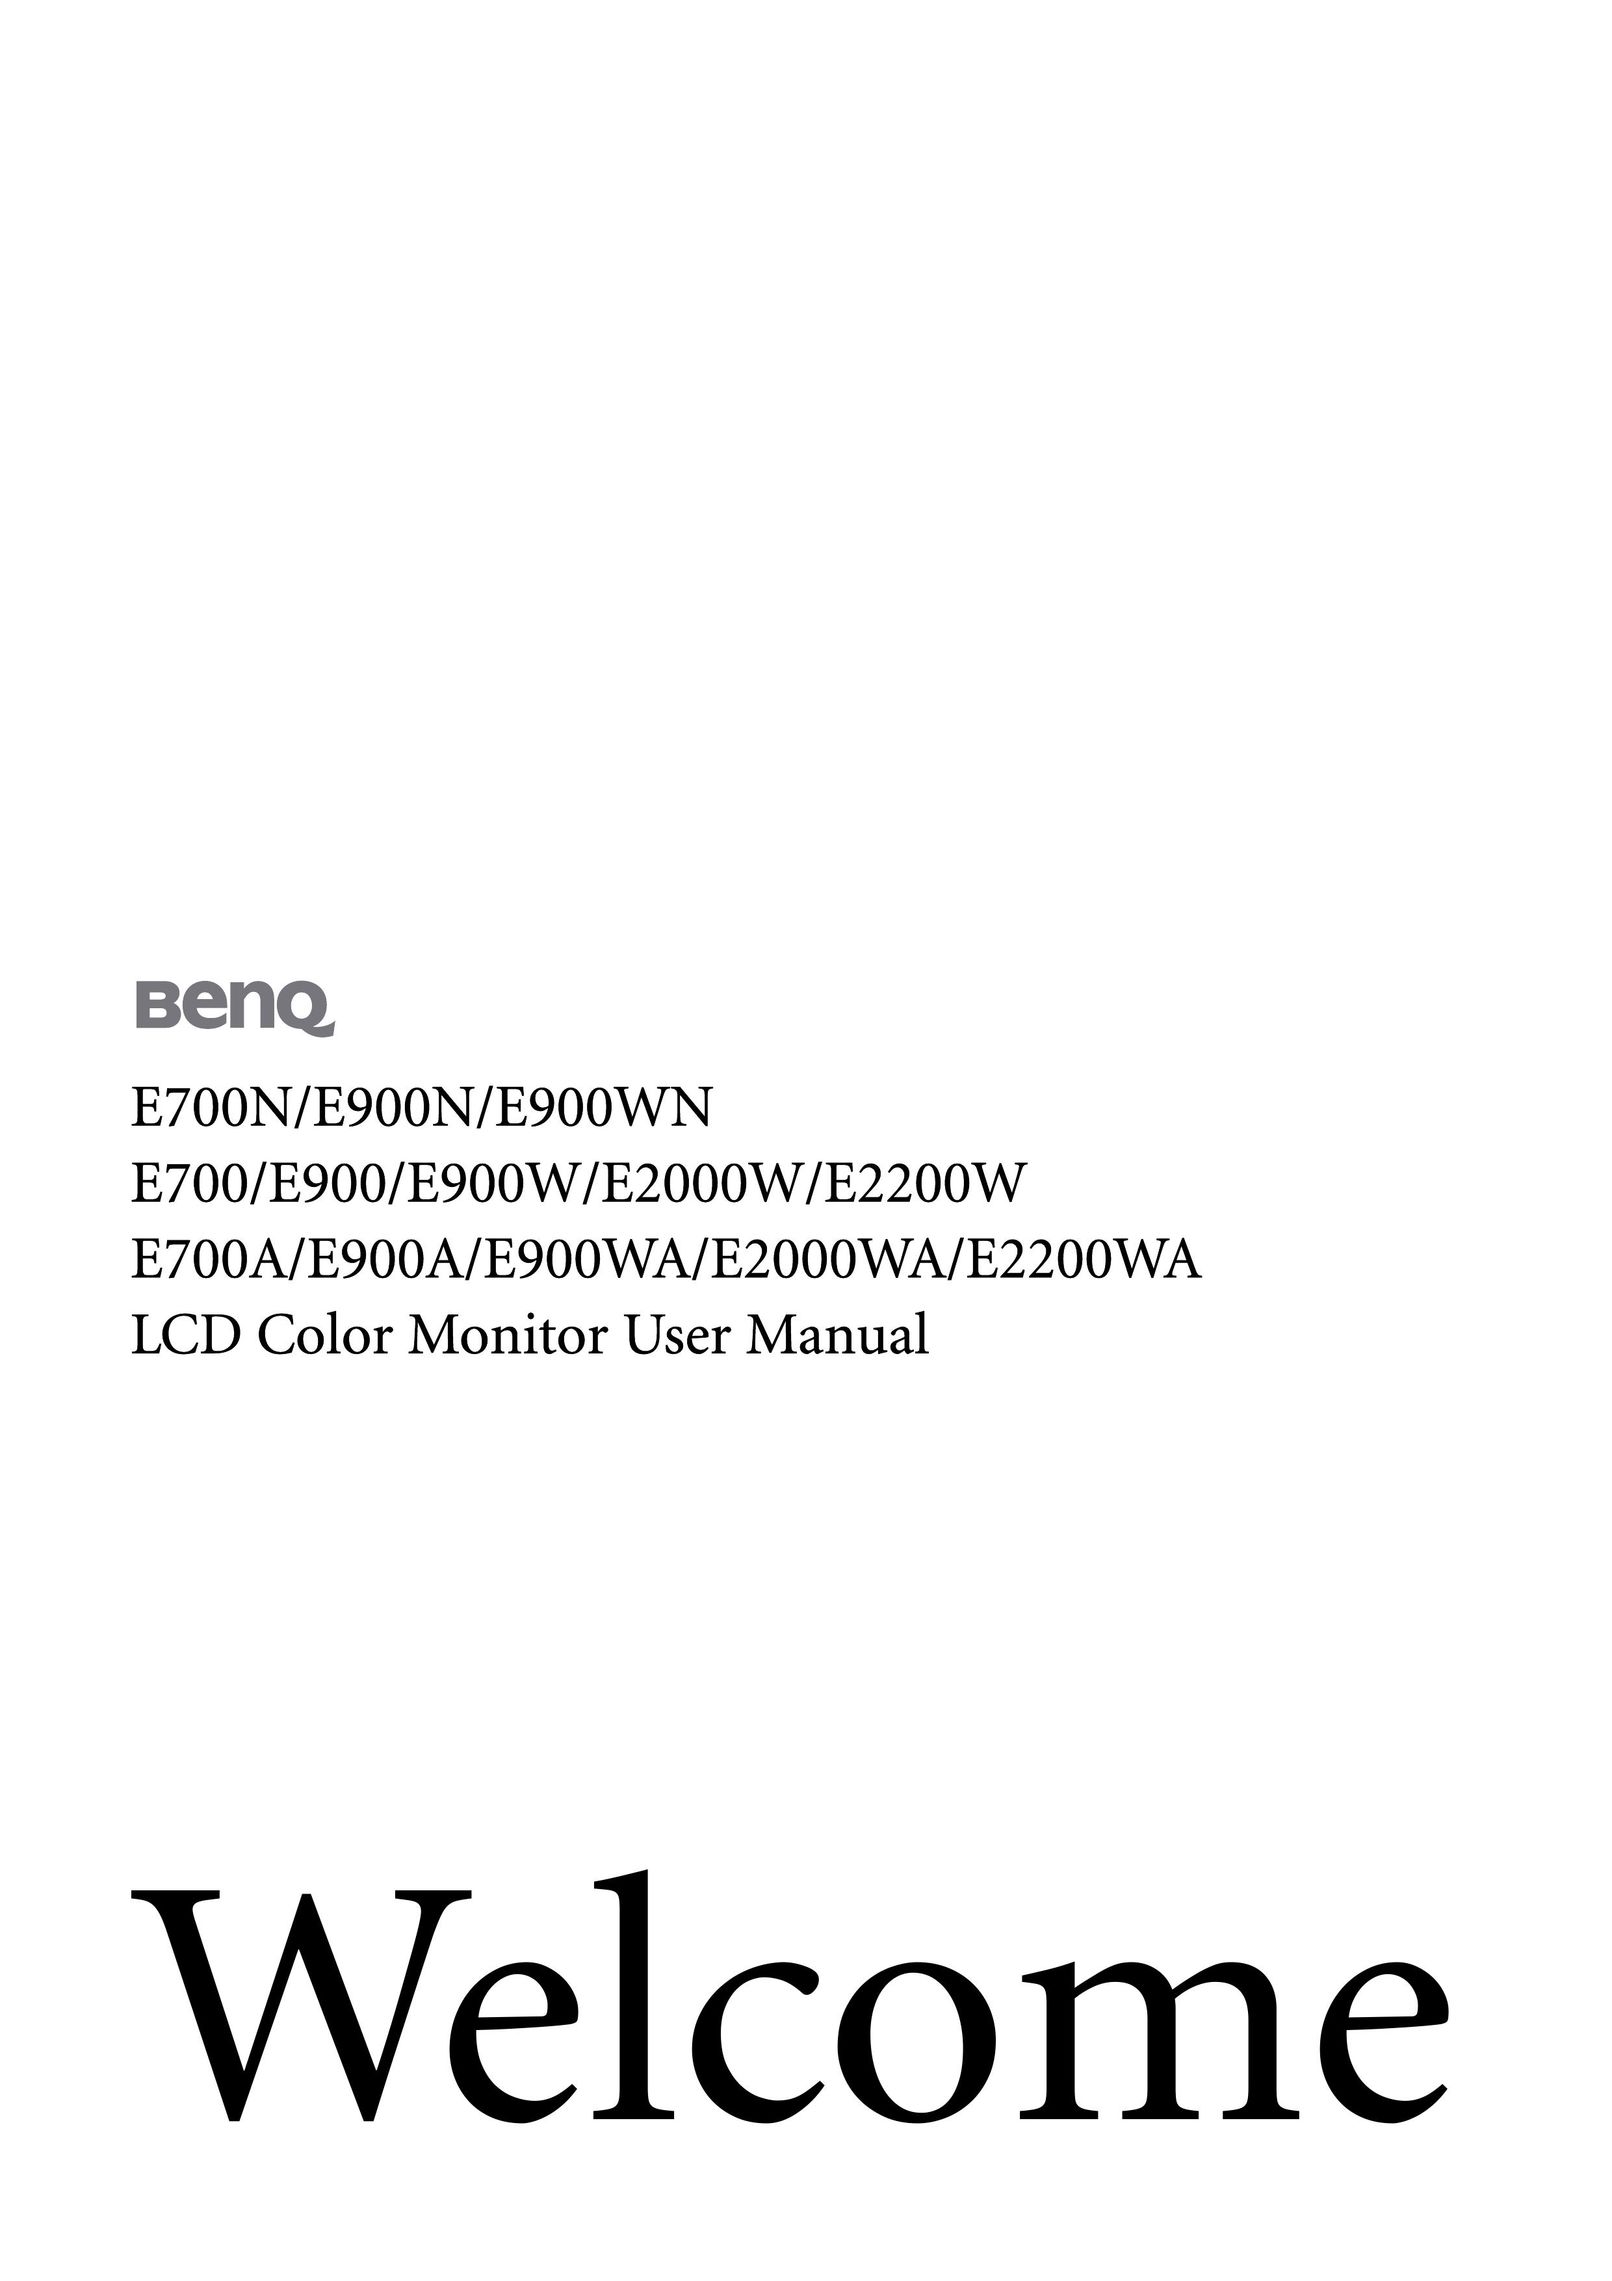 BenQ E900A Computer Monitor User Manual